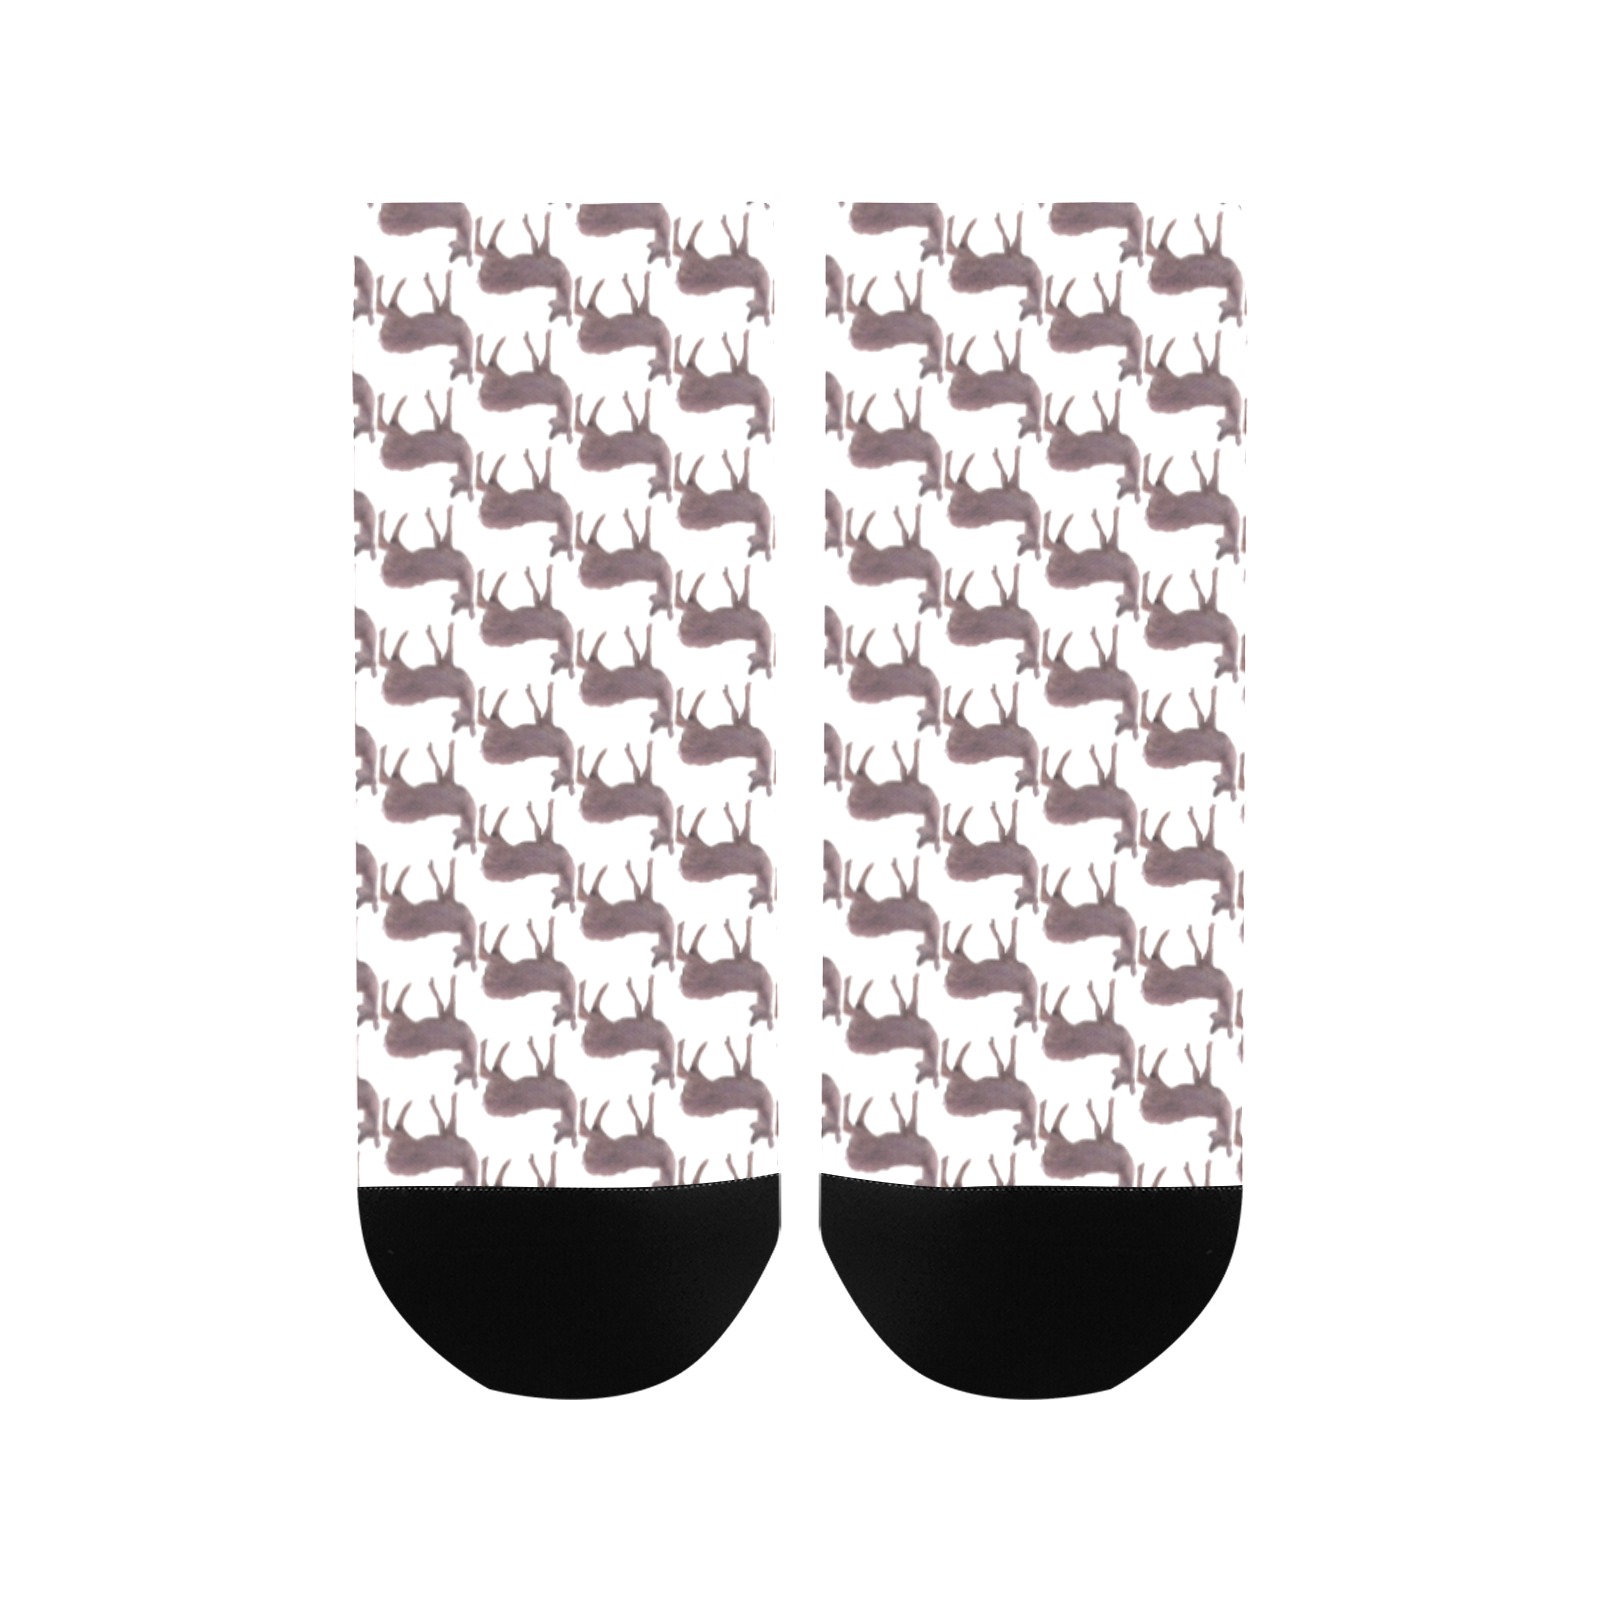 Does Deers Women's Ankle Socks